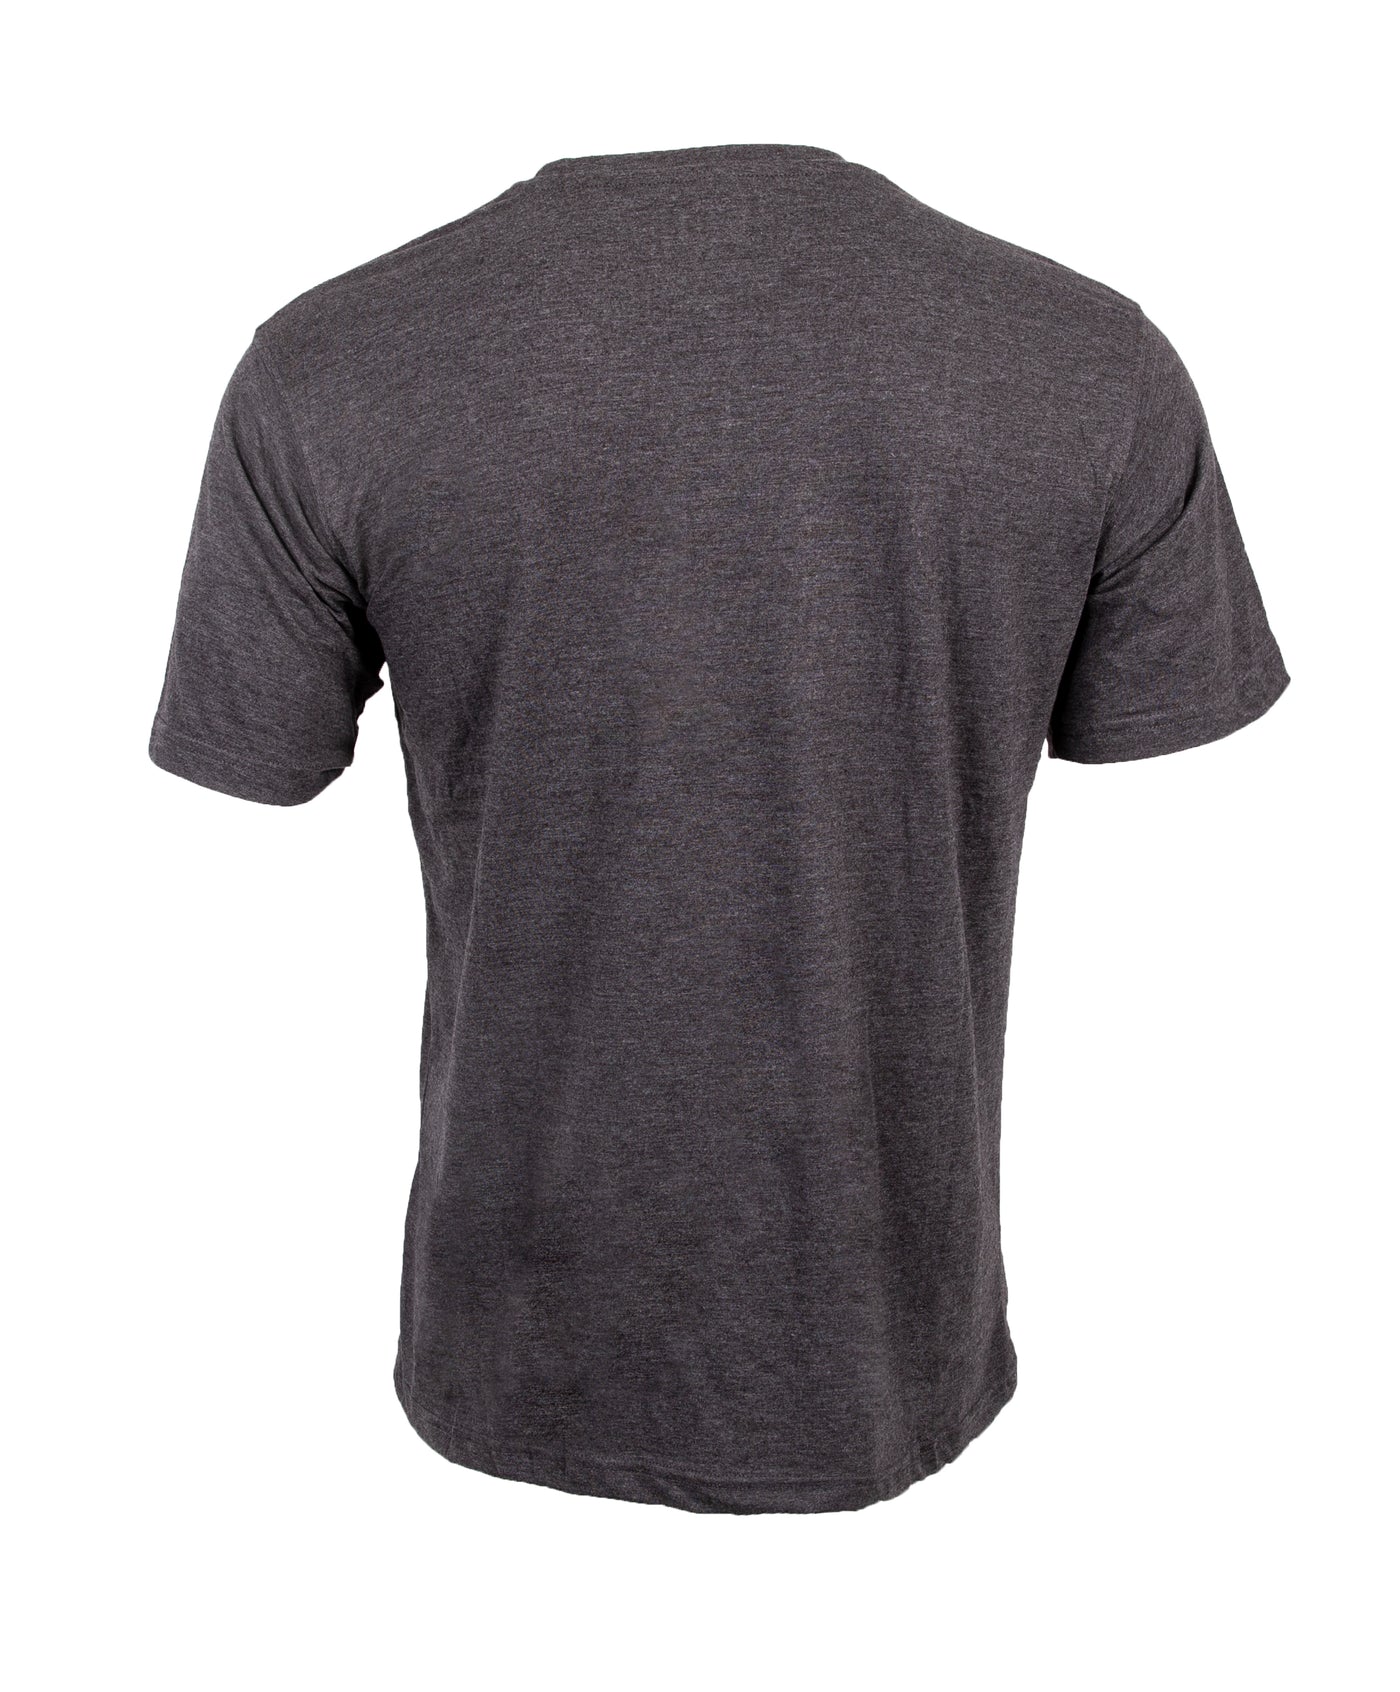 "Team Ecotone" men's short-sleeved hunting t-shirt